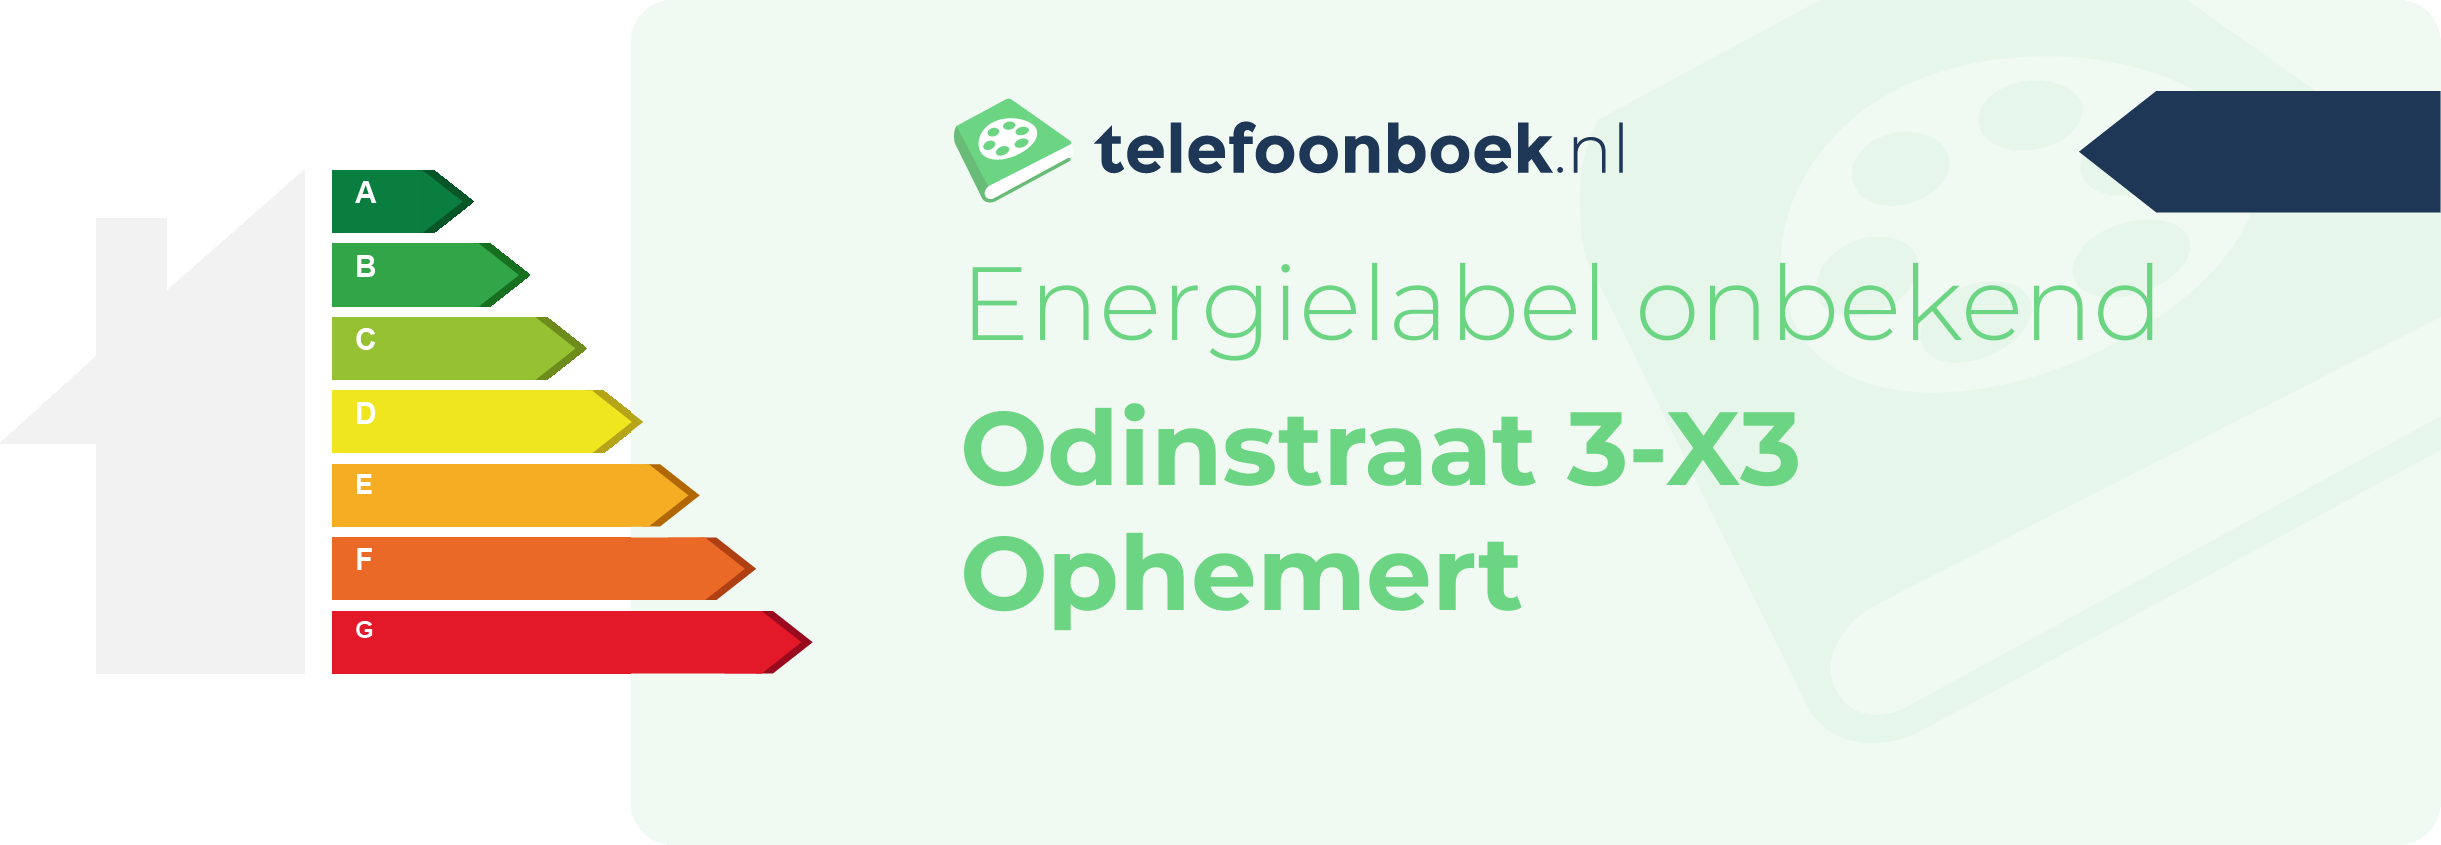 Energielabel Odinstraat 3-X3 Ophemert